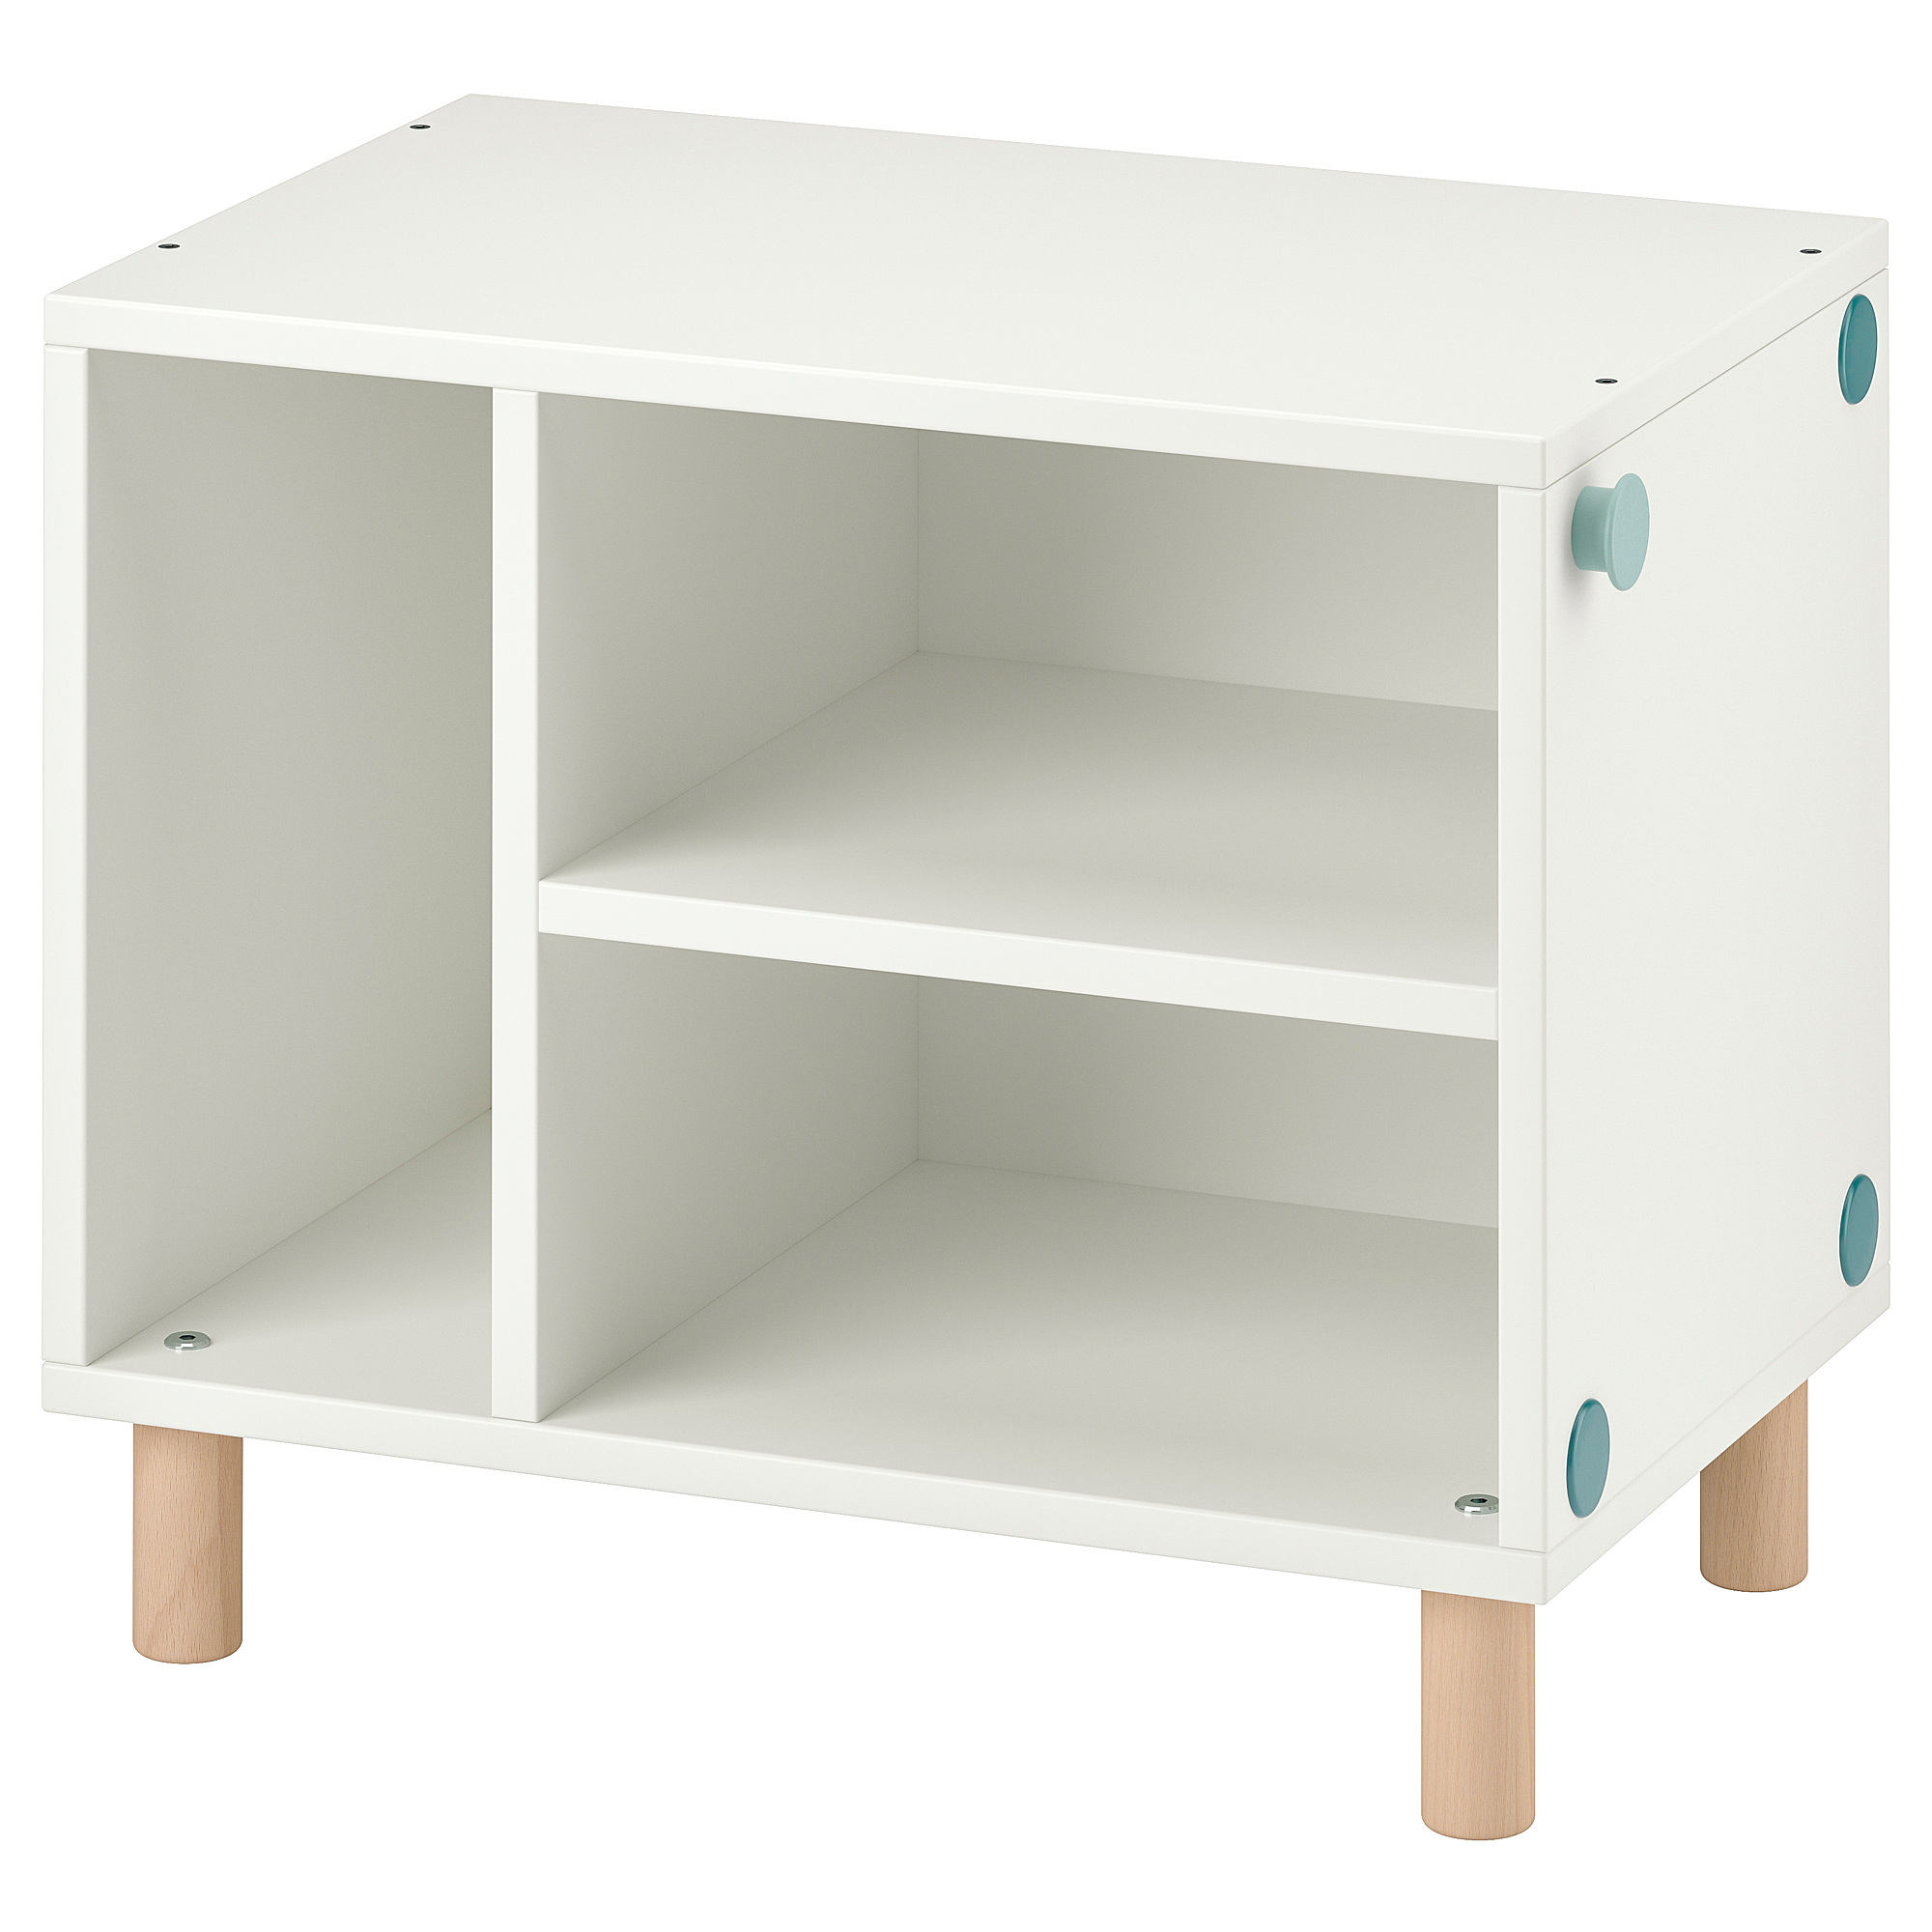 SMUSSLA bedside table/shelf unit